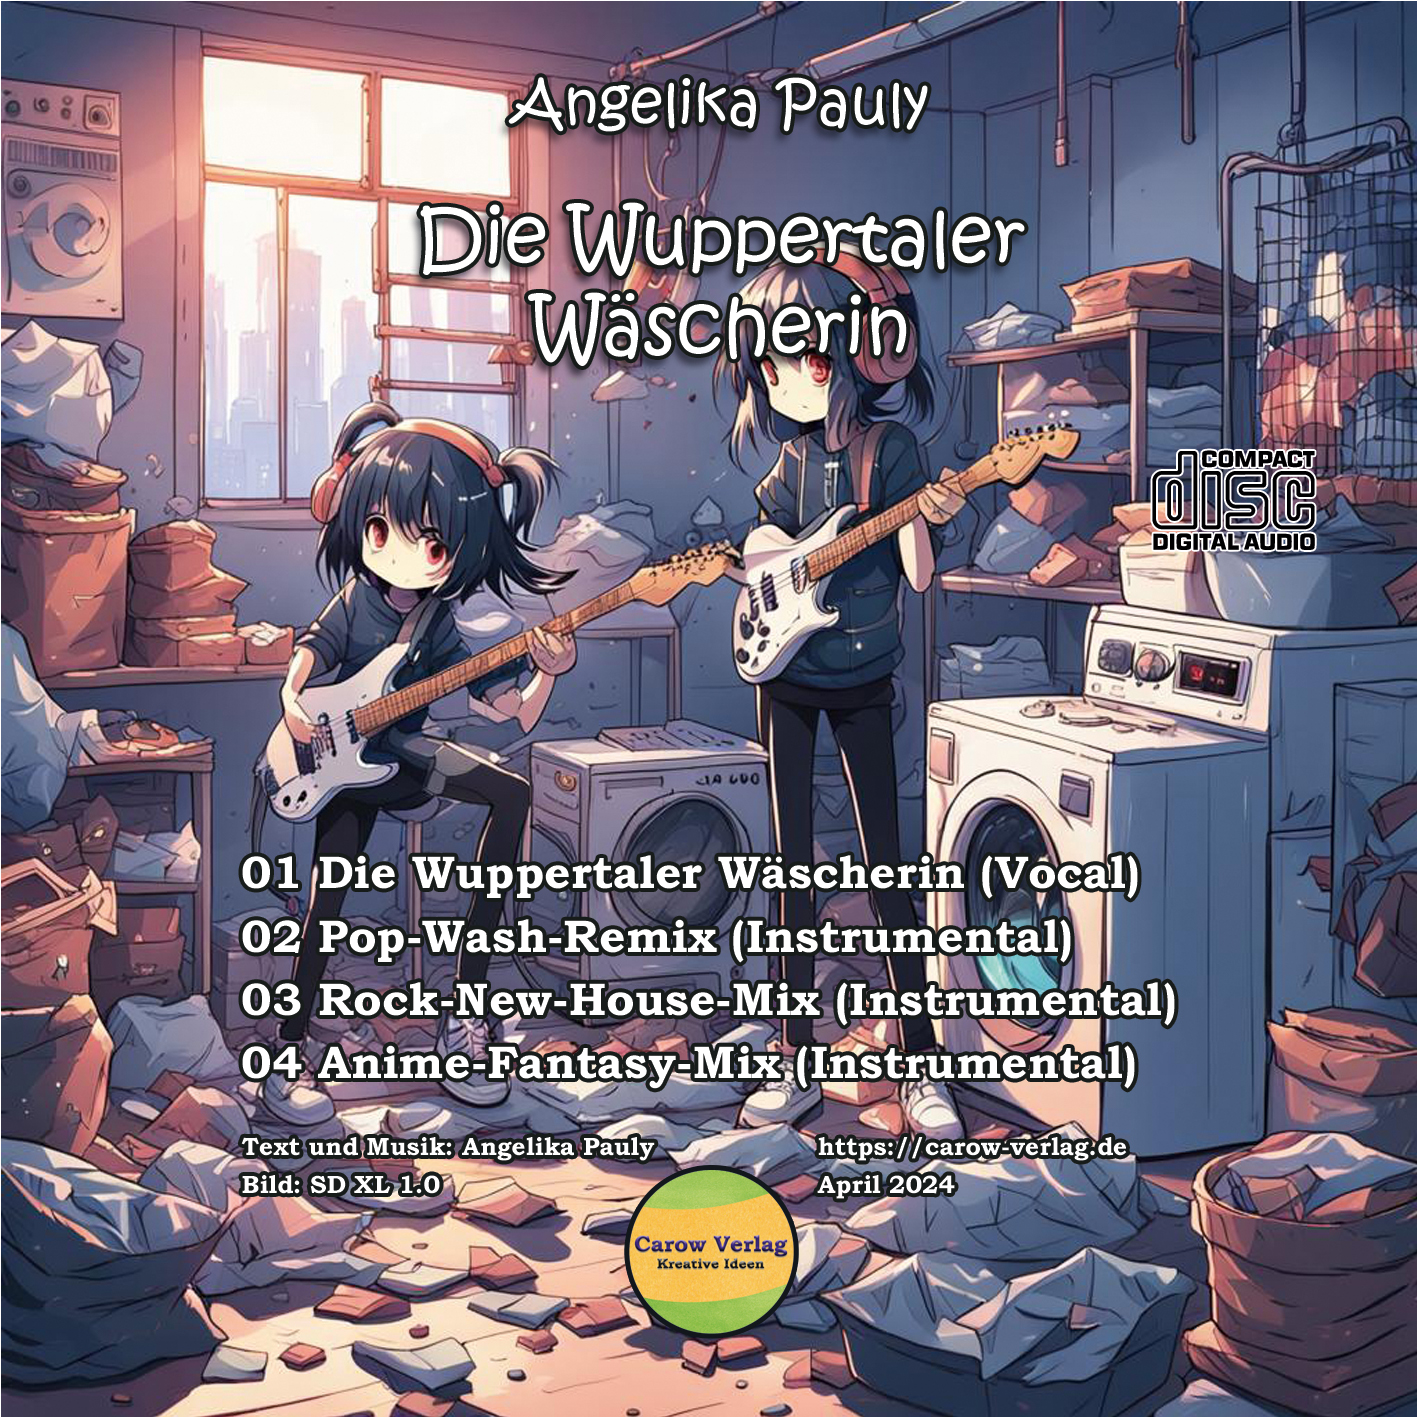 CD-Single „Wuppertaler Wäscherin“ ist erschienen